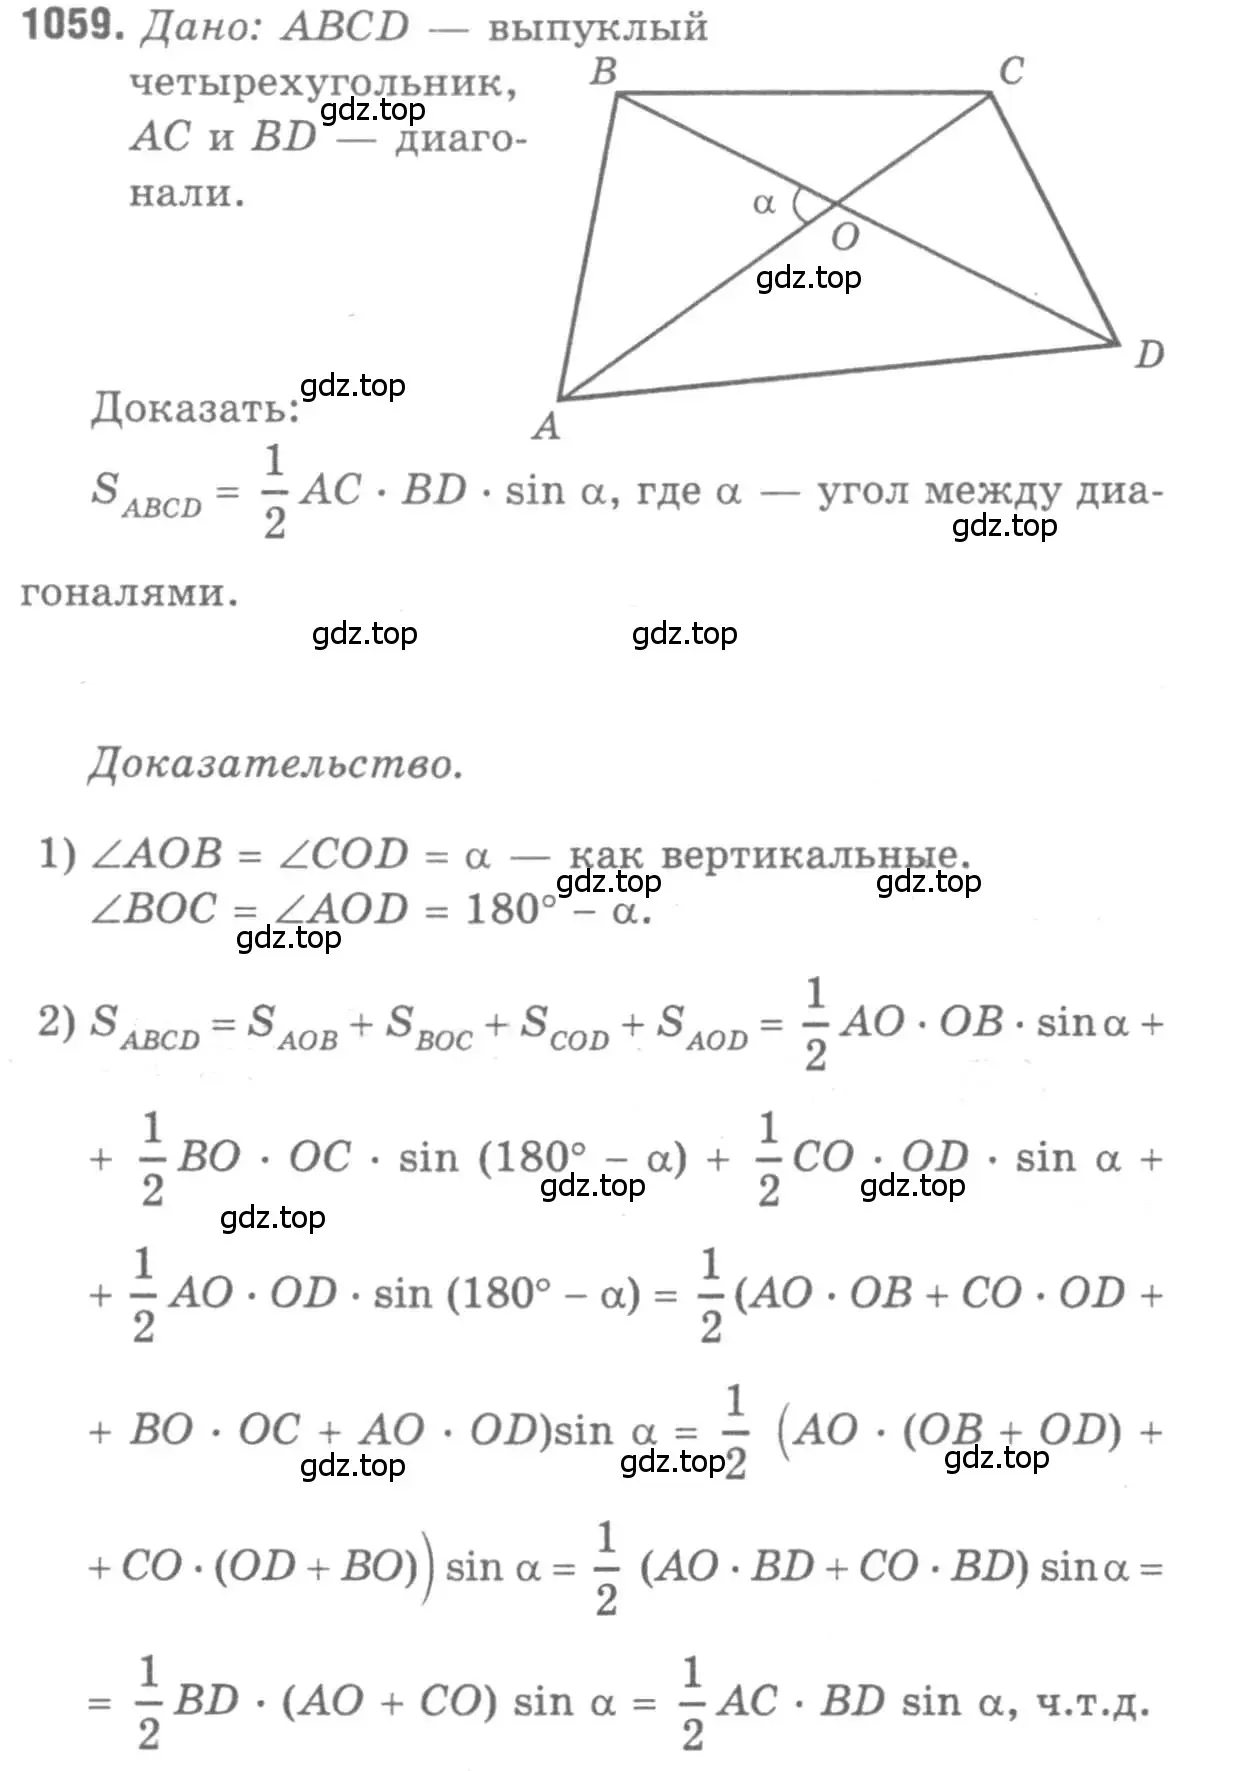 Решение 9. номер 1059 (страница 267) гдз по геометрии 7-9 класс Атанасян, Бутузов, учебник